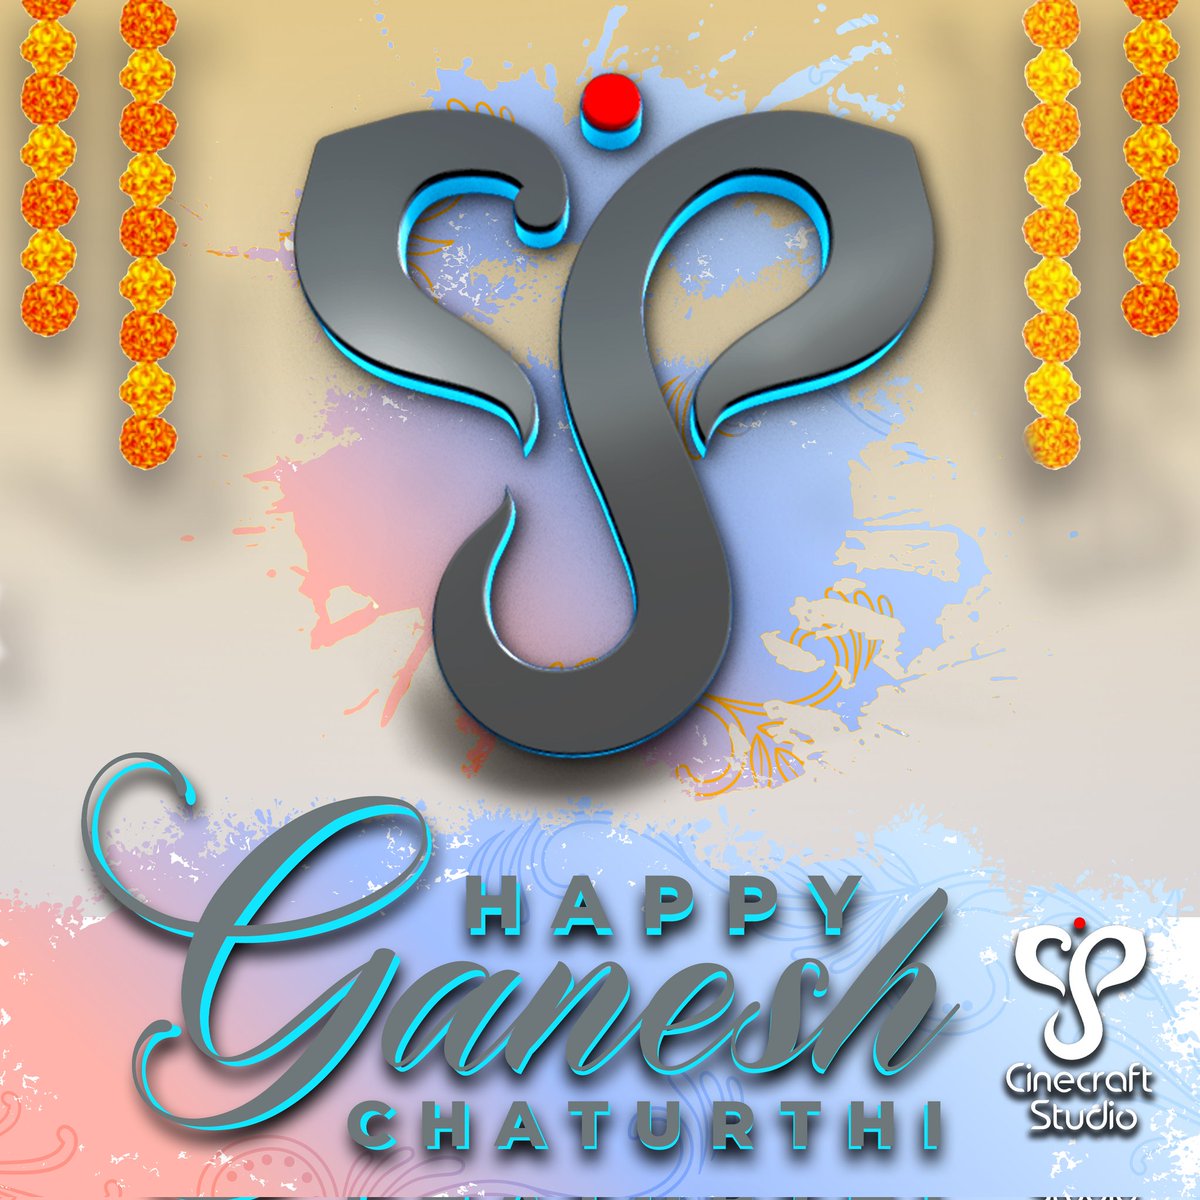 May Lord Ganesha destroy all your worries & sorrows. Cinecraftstudio wishes you all #HappyGaneshChaturthi 🙏